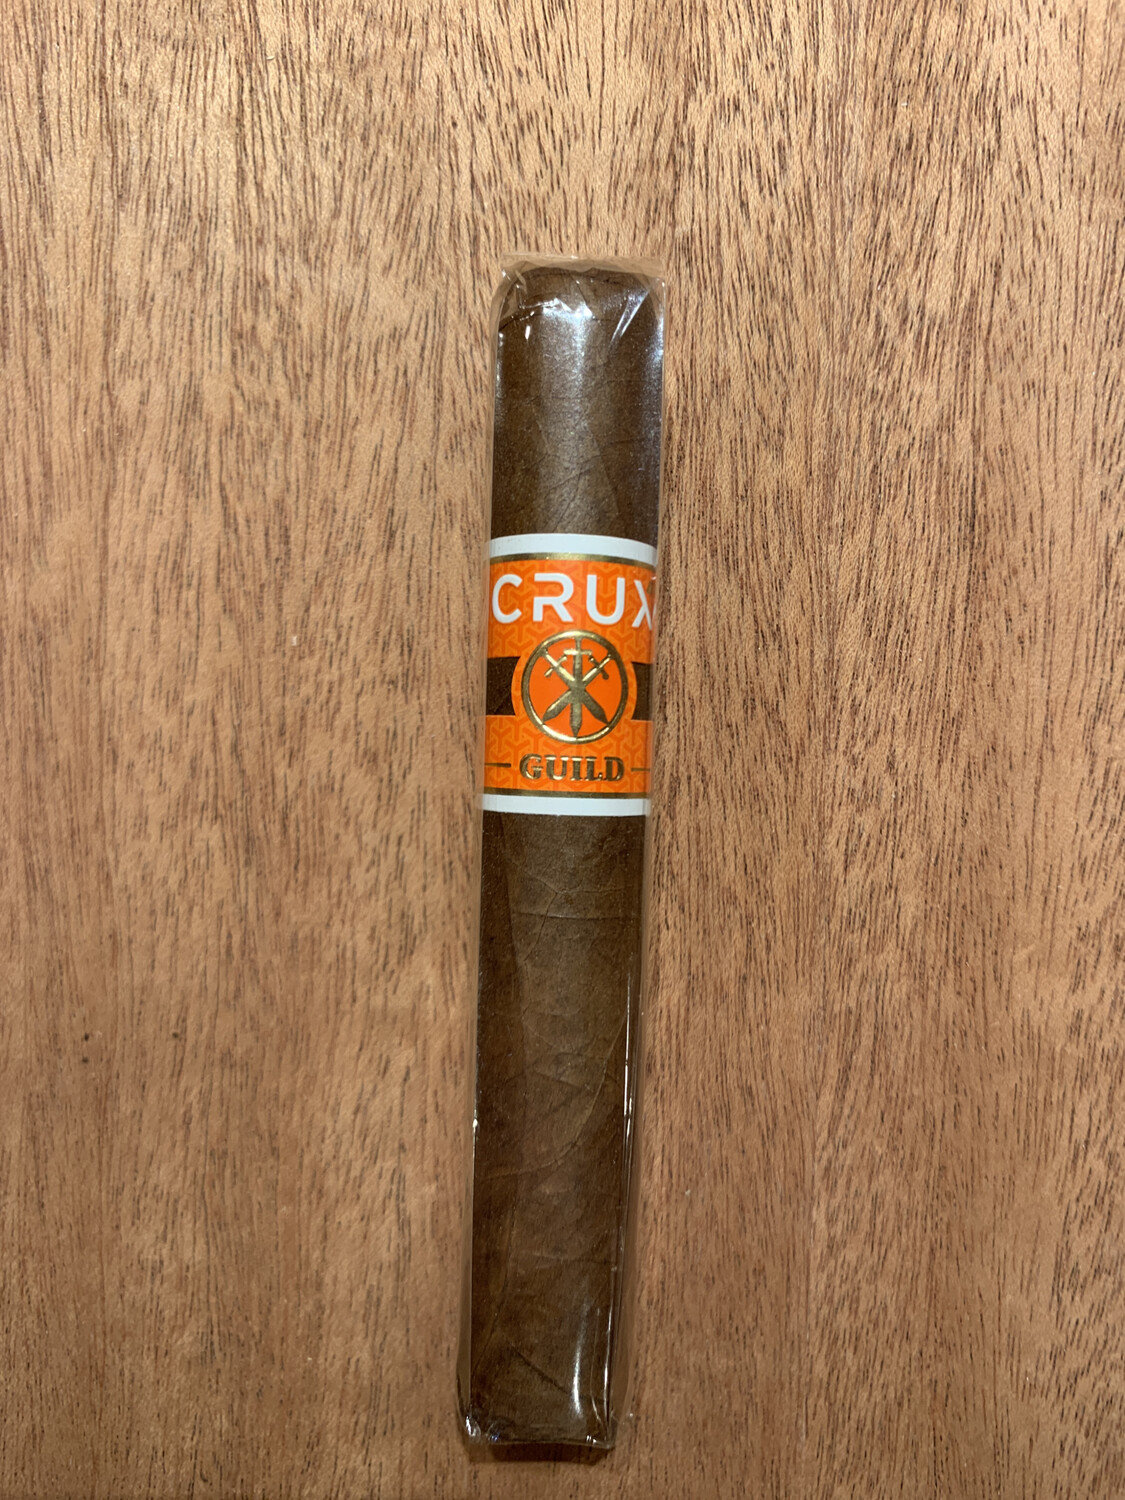 Crux- Guild Robusto 5x50